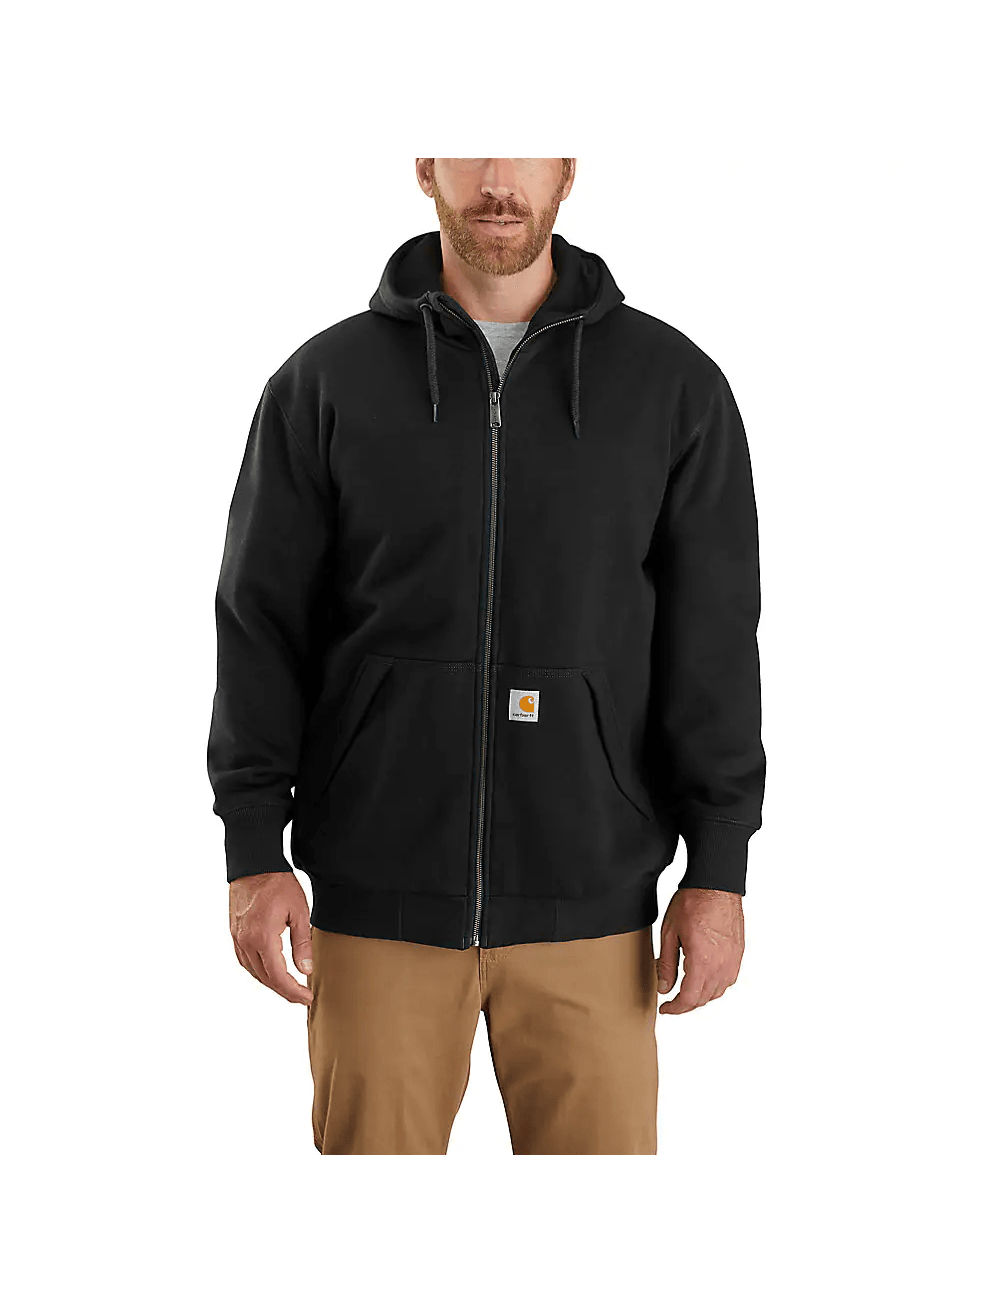 Rain defender® loose fit midweight thermal-lined full-zip sweatshirt - Black - Purpose-Built / Home of the Trades